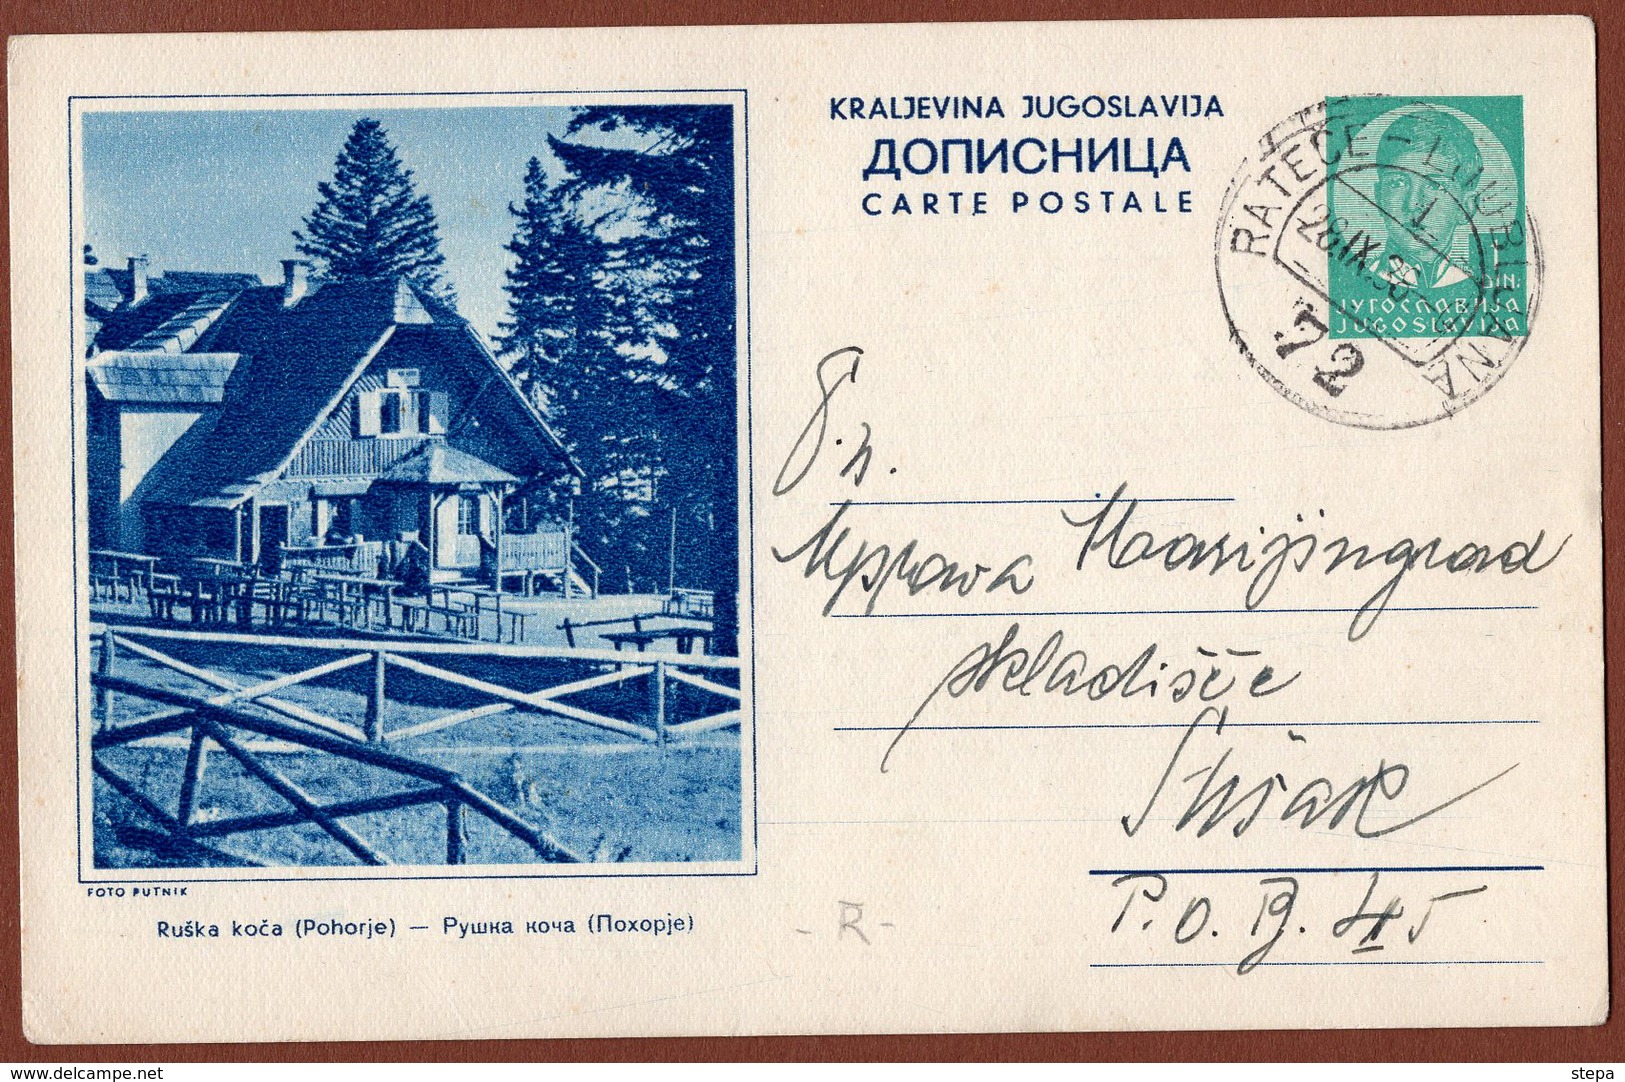 YUGOSLAVIA-SLOVENIA, POHORJE-MOUNTAIN,RATECE-LJUBLJANA RAILWAY 5th EDITION ILLUSTRATED POSTAL CARD - Postal Stationery